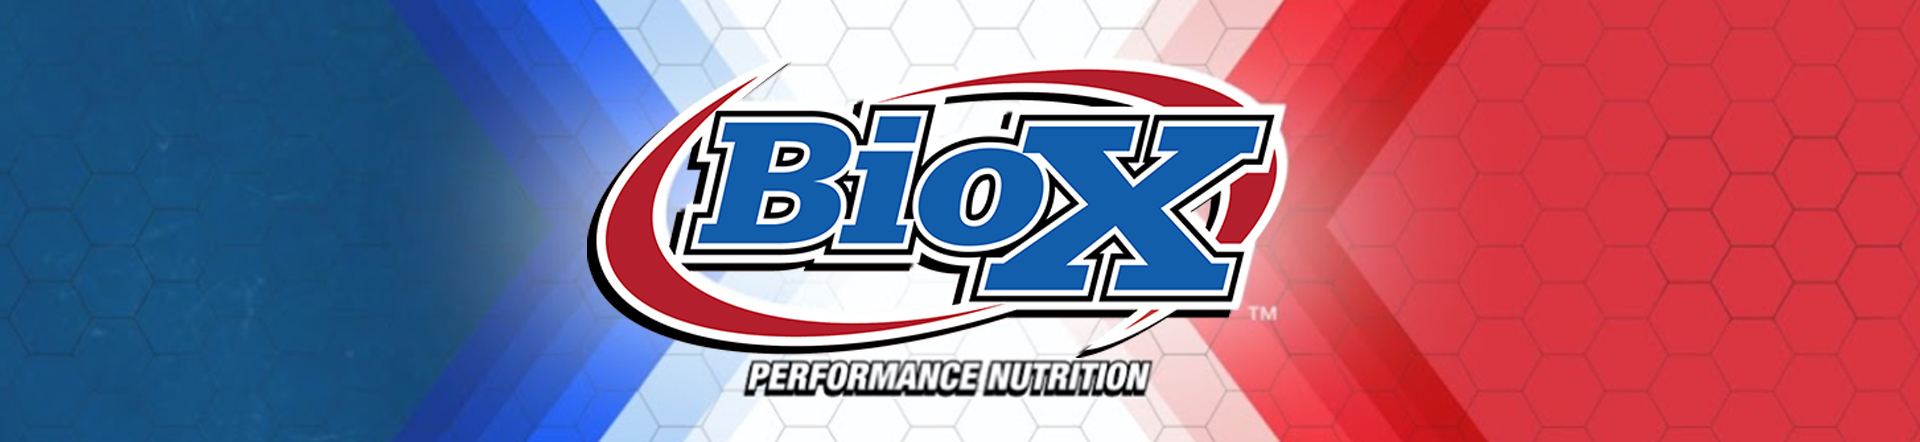 BioX The Smart Choice!